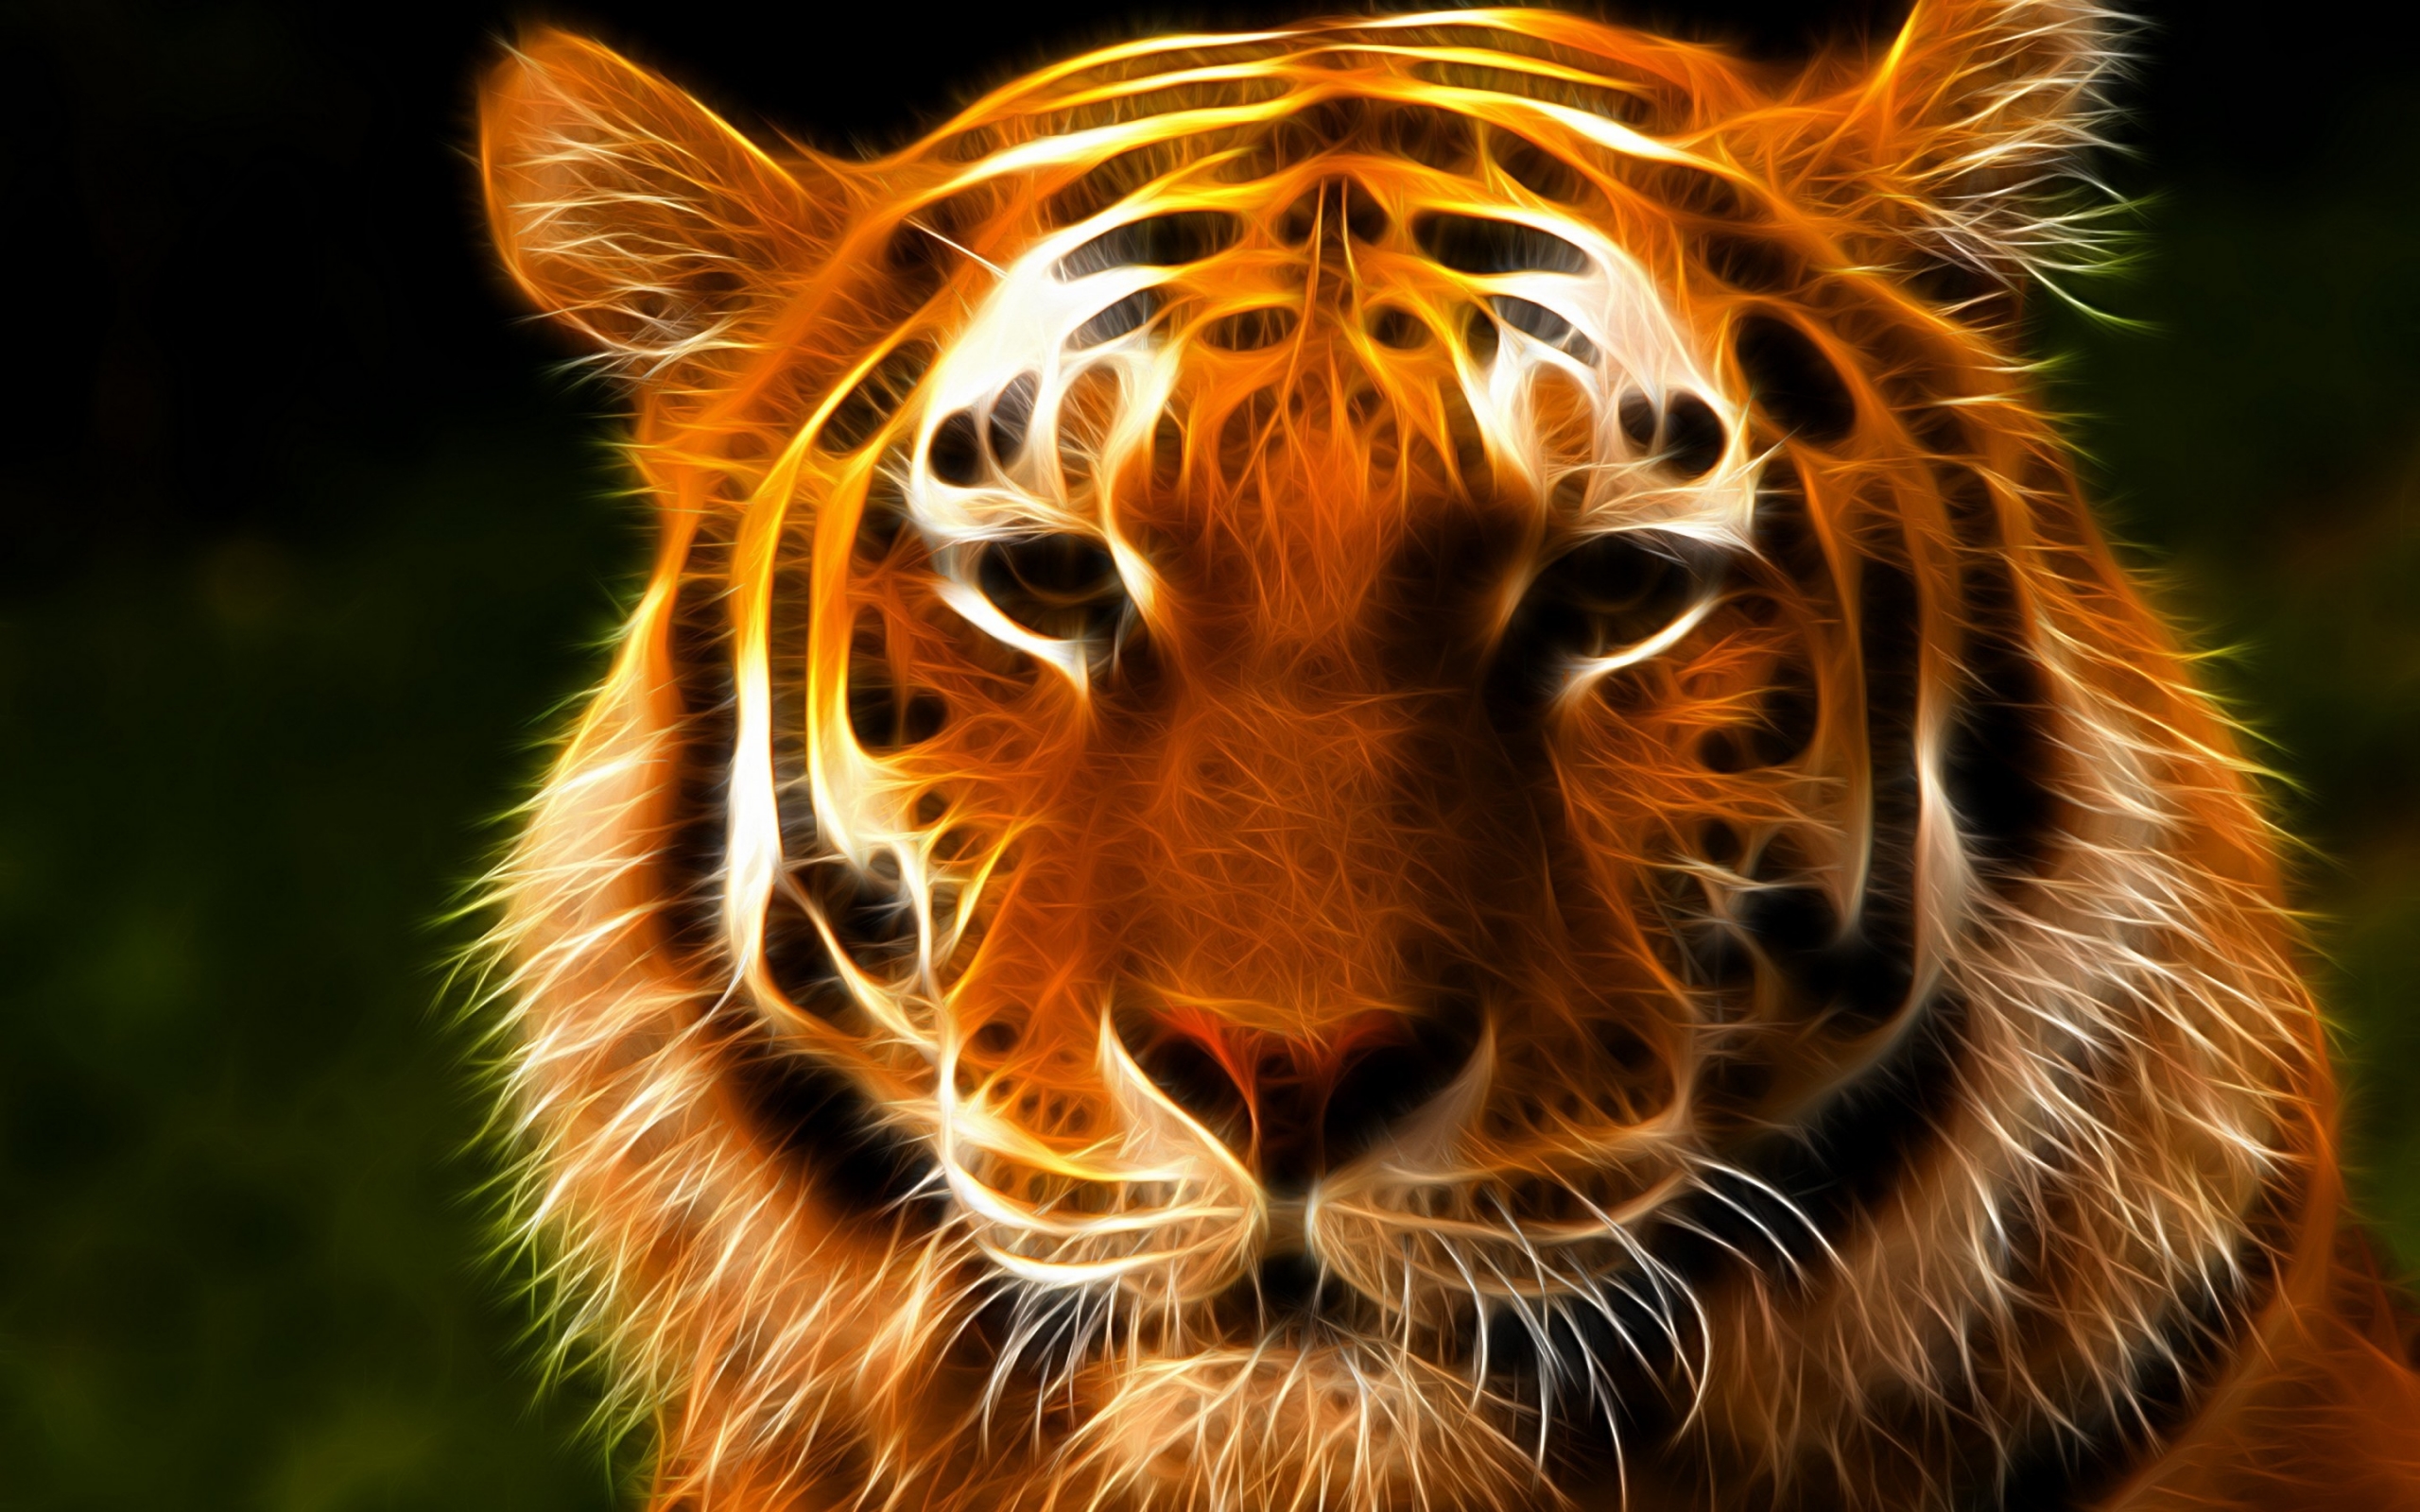 Tiger Face Art for 2560 x 1600 widescreen resolution